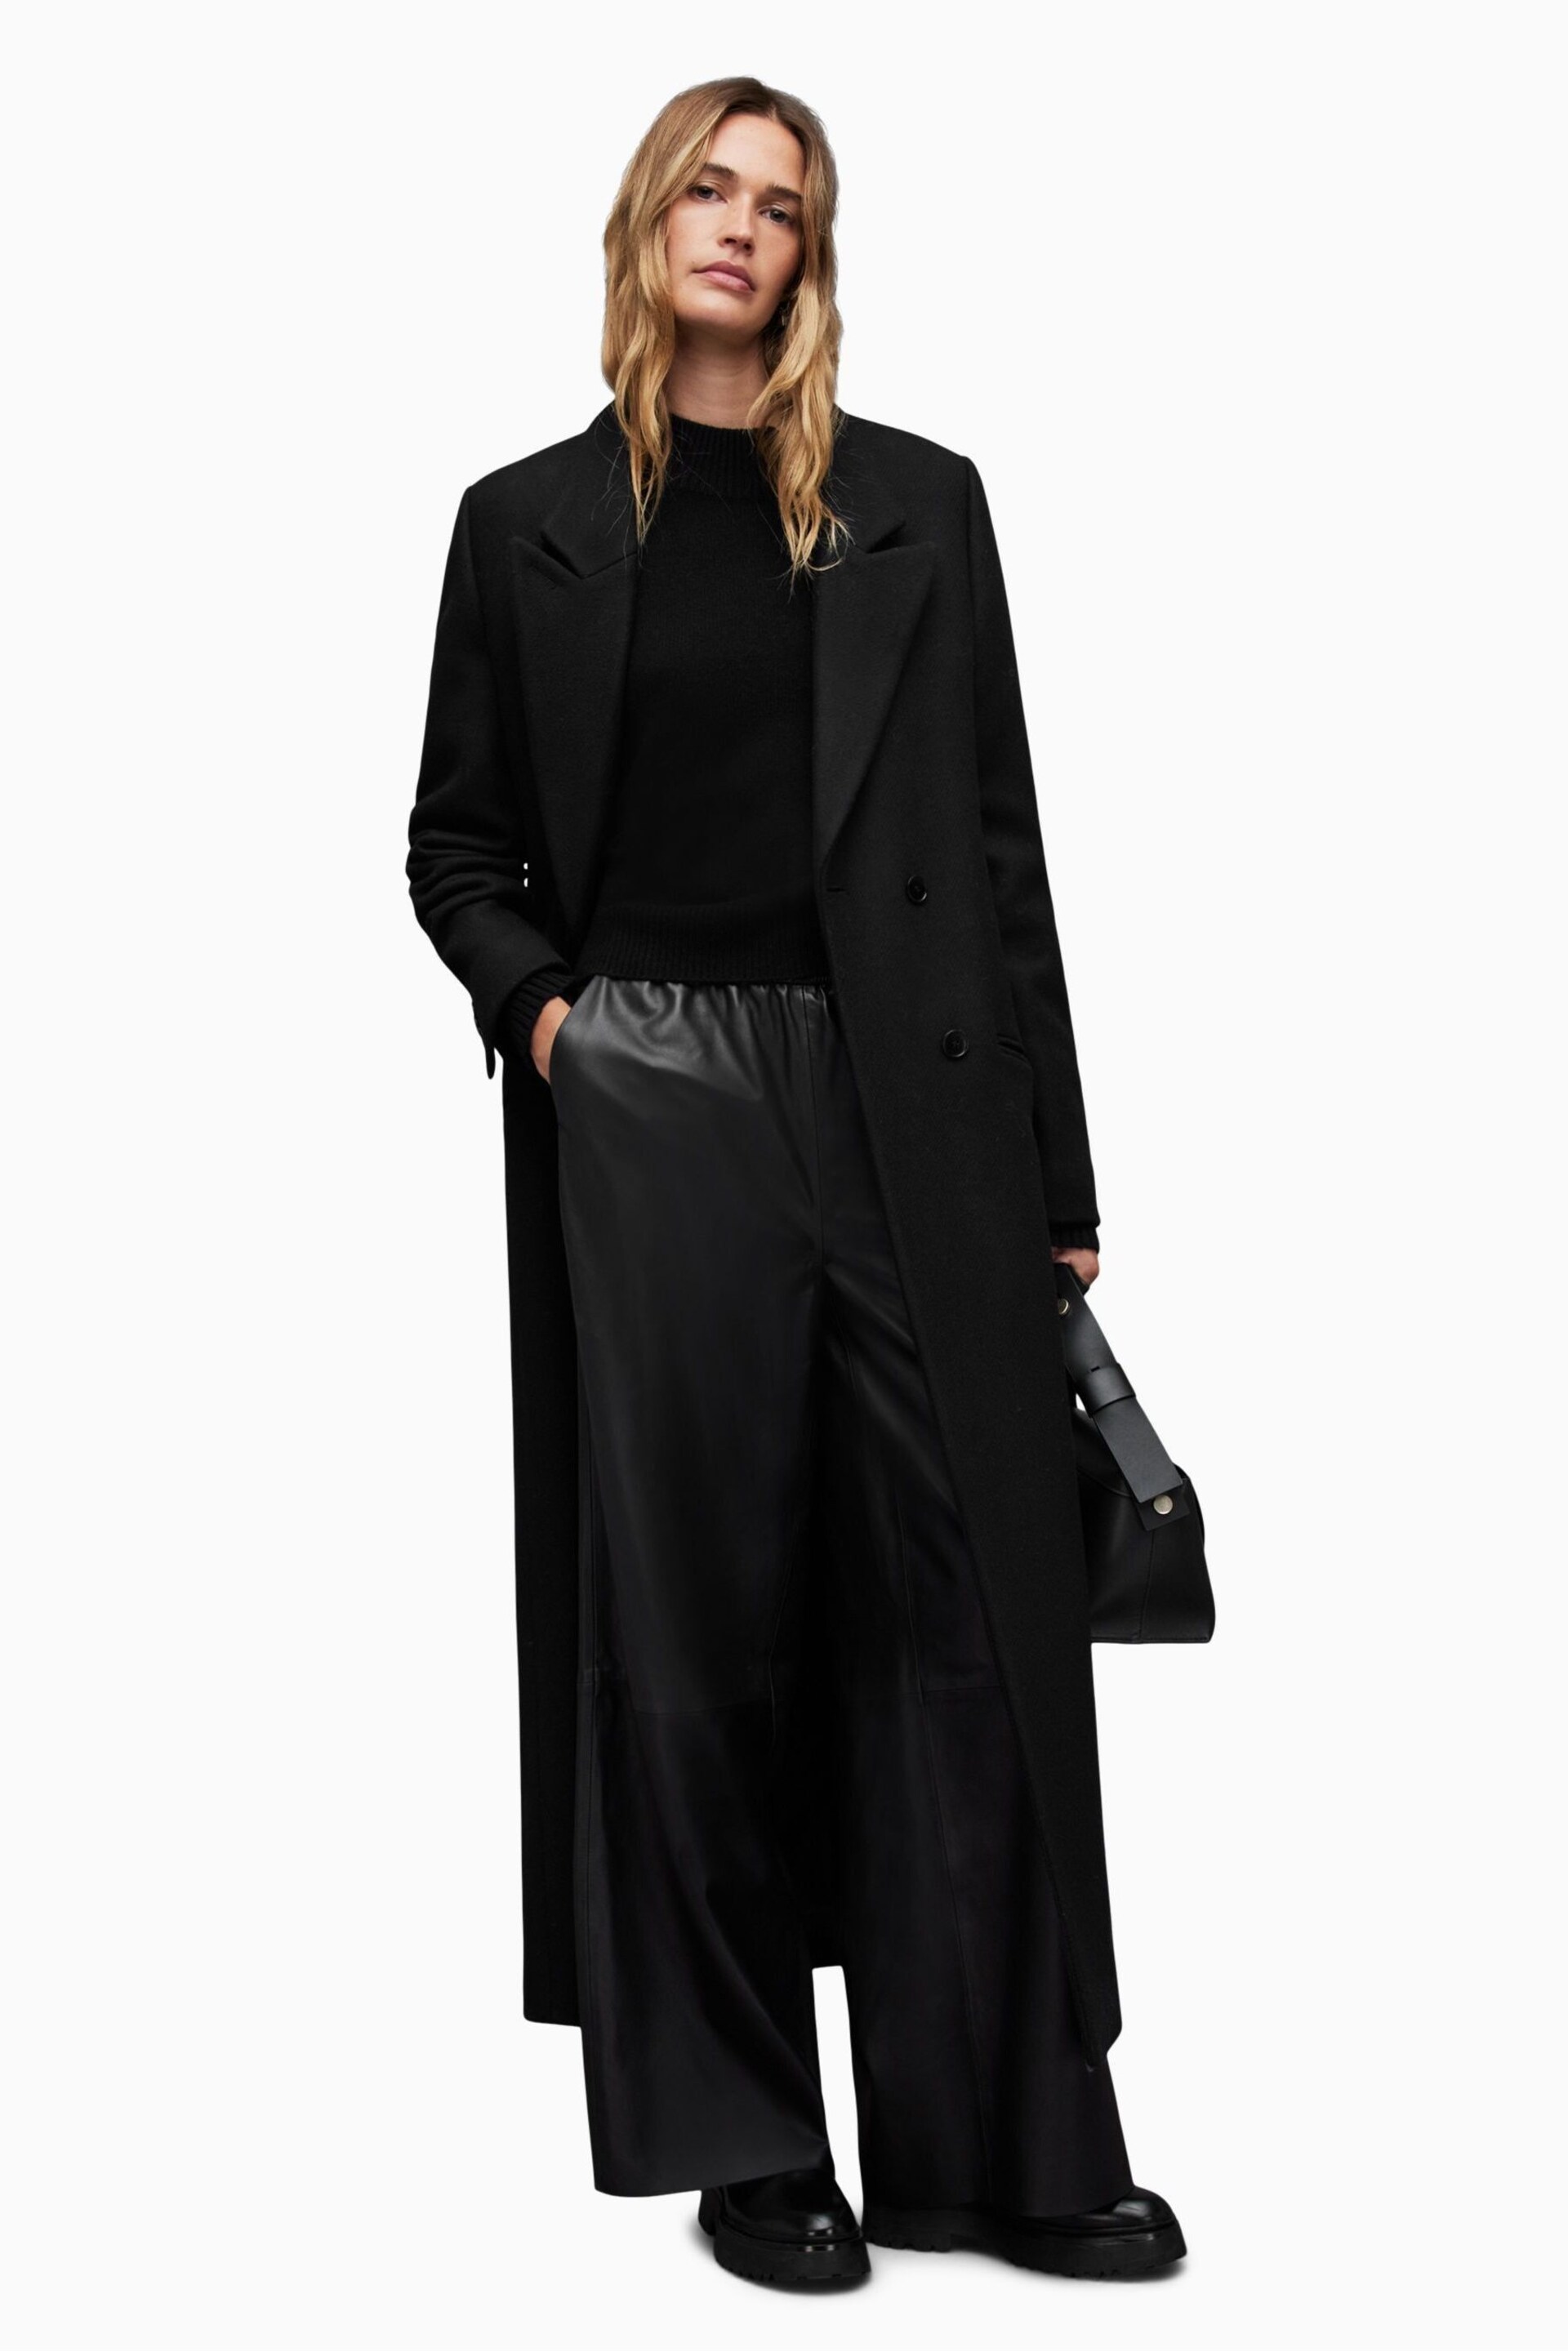 AllSaints Black Ellen Coat - Image 1 of 7